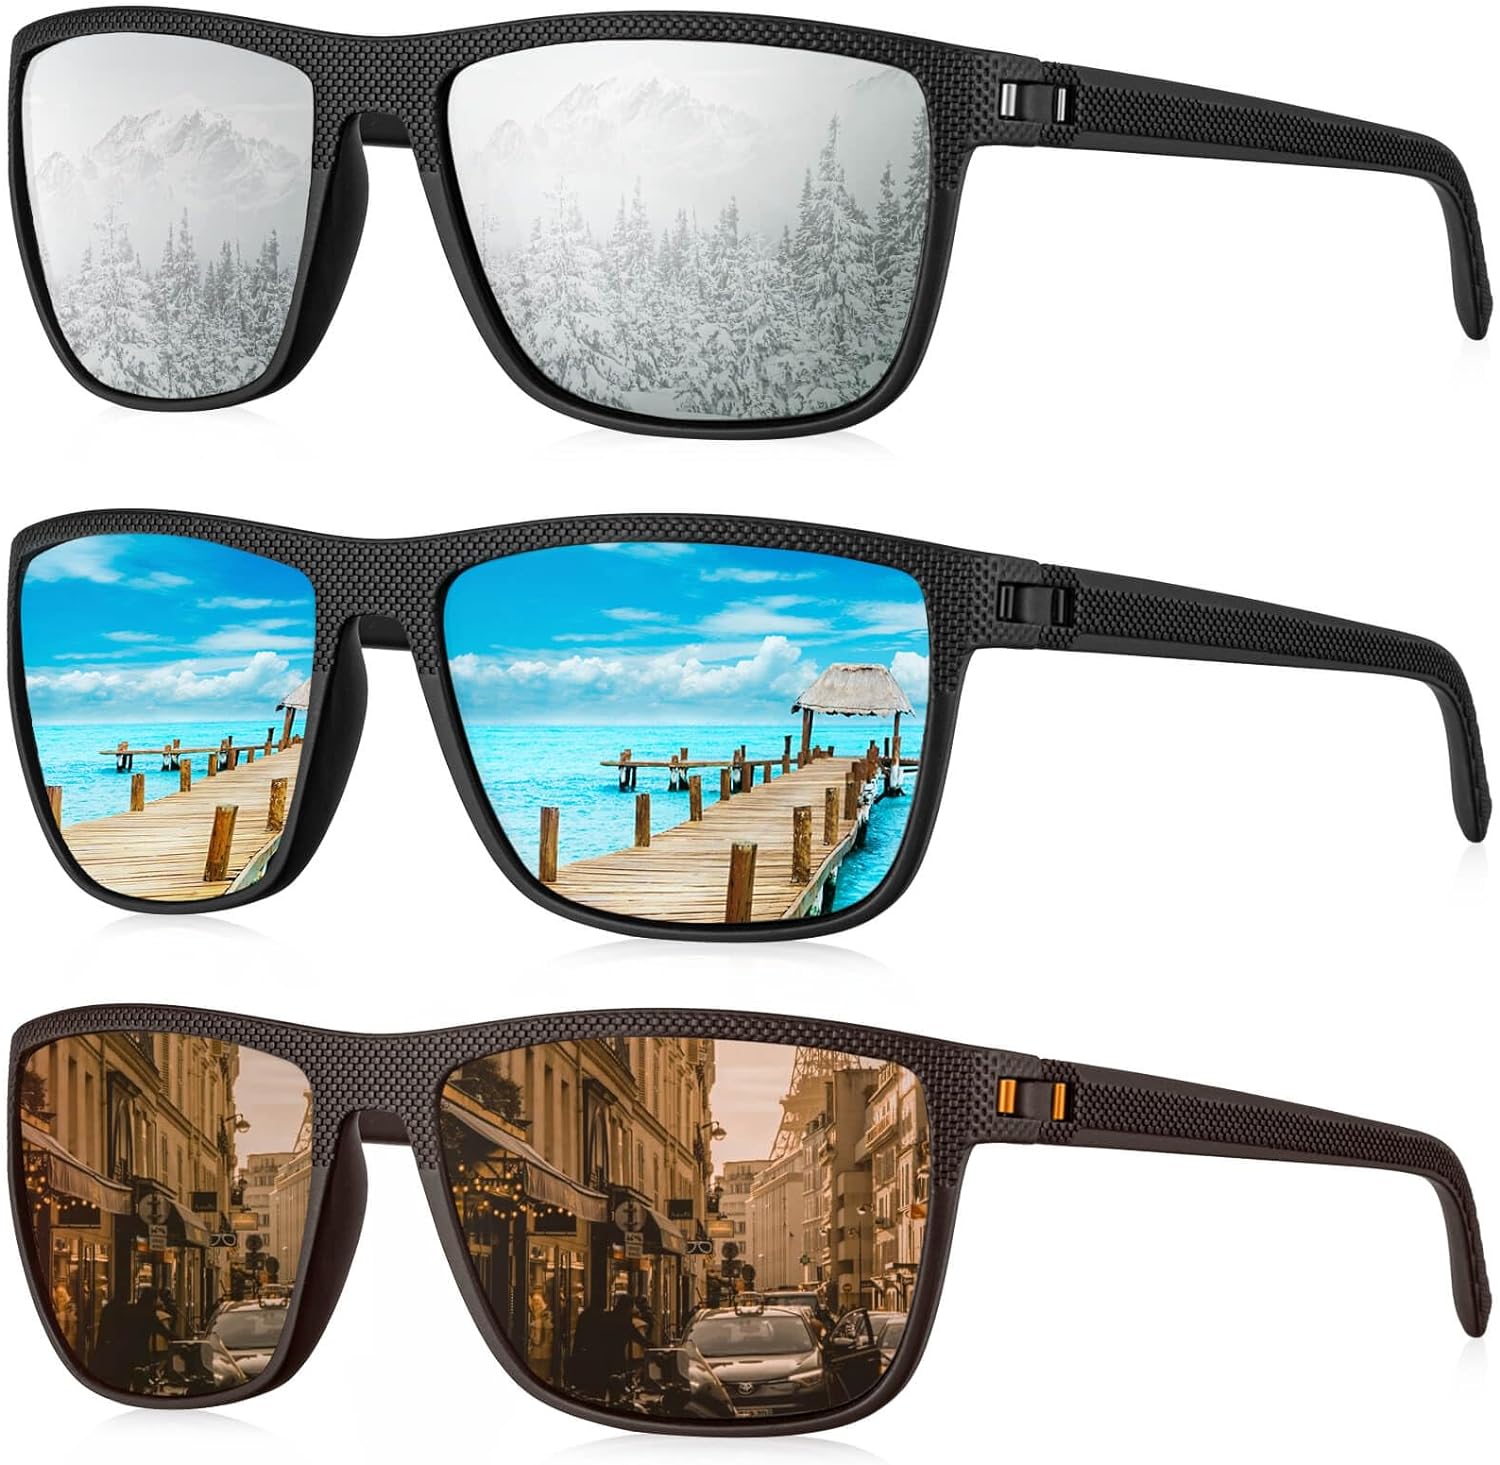 KALIYADI Polarized Sunglasses for Men, Lightweight Sun Glasses